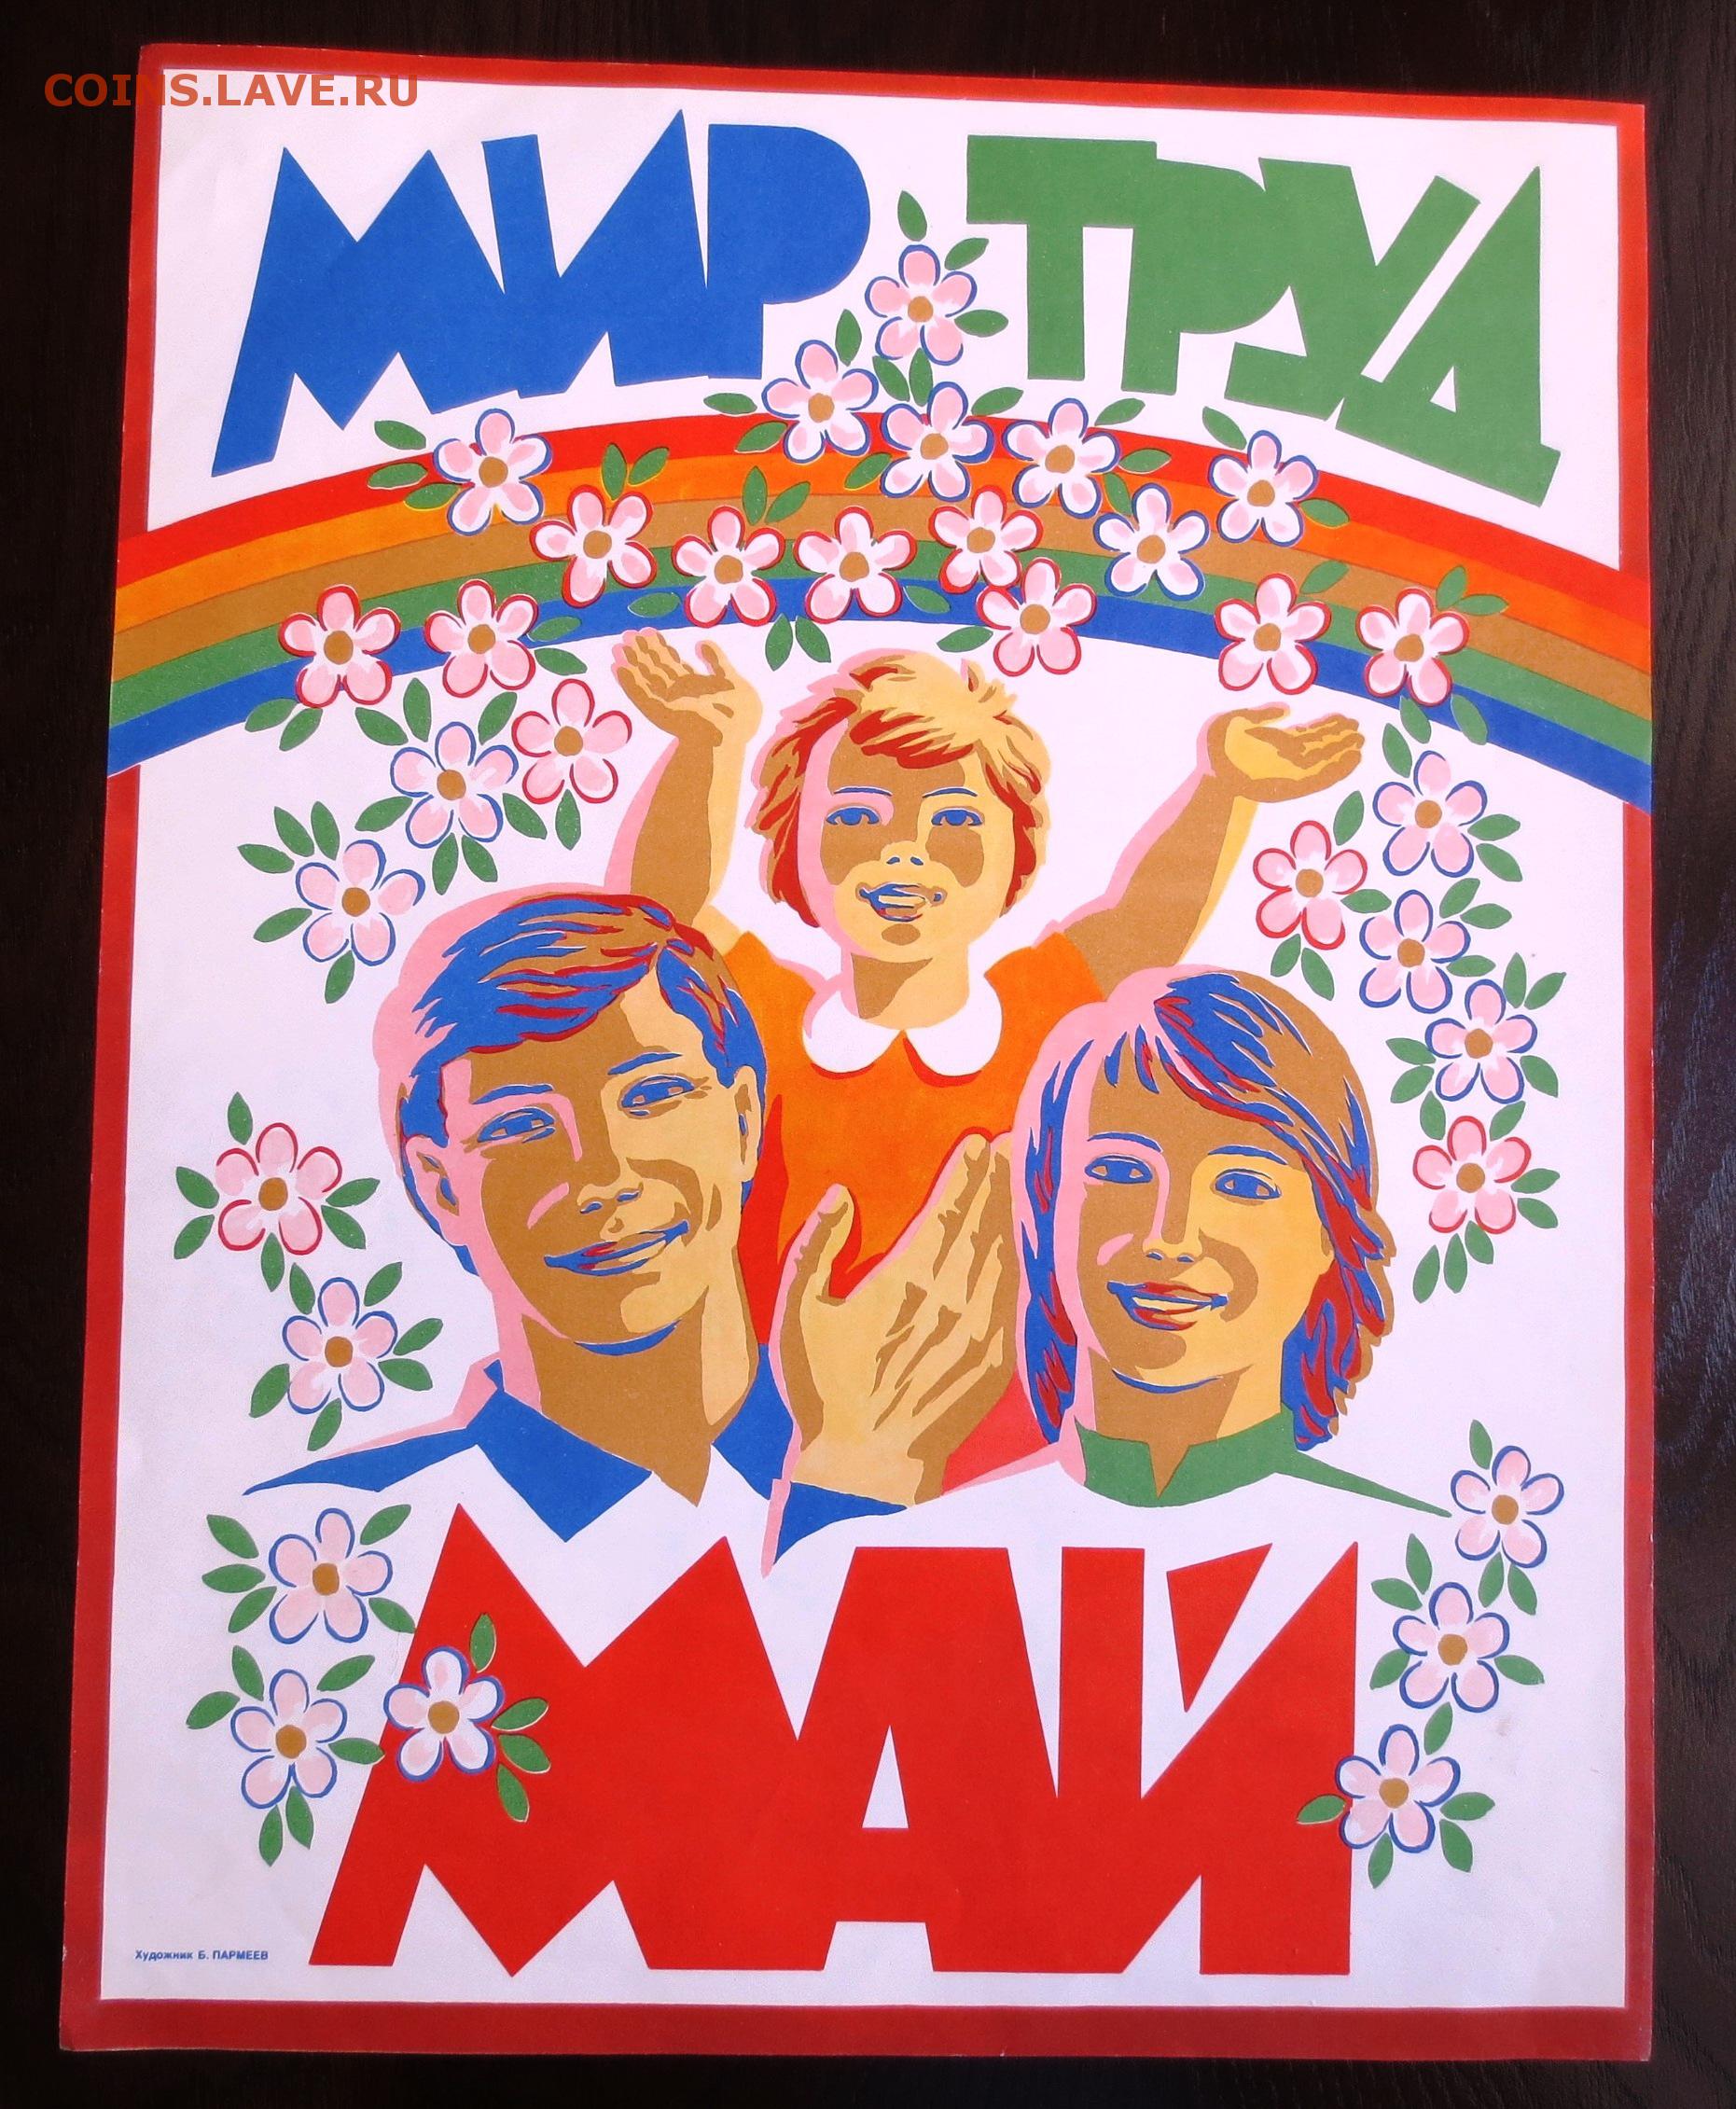 Плакат 80 лет. 1 Мая плакат. Лозунги 90-х годов. Мир труд май лозунг. Плакаты 80-х годов.